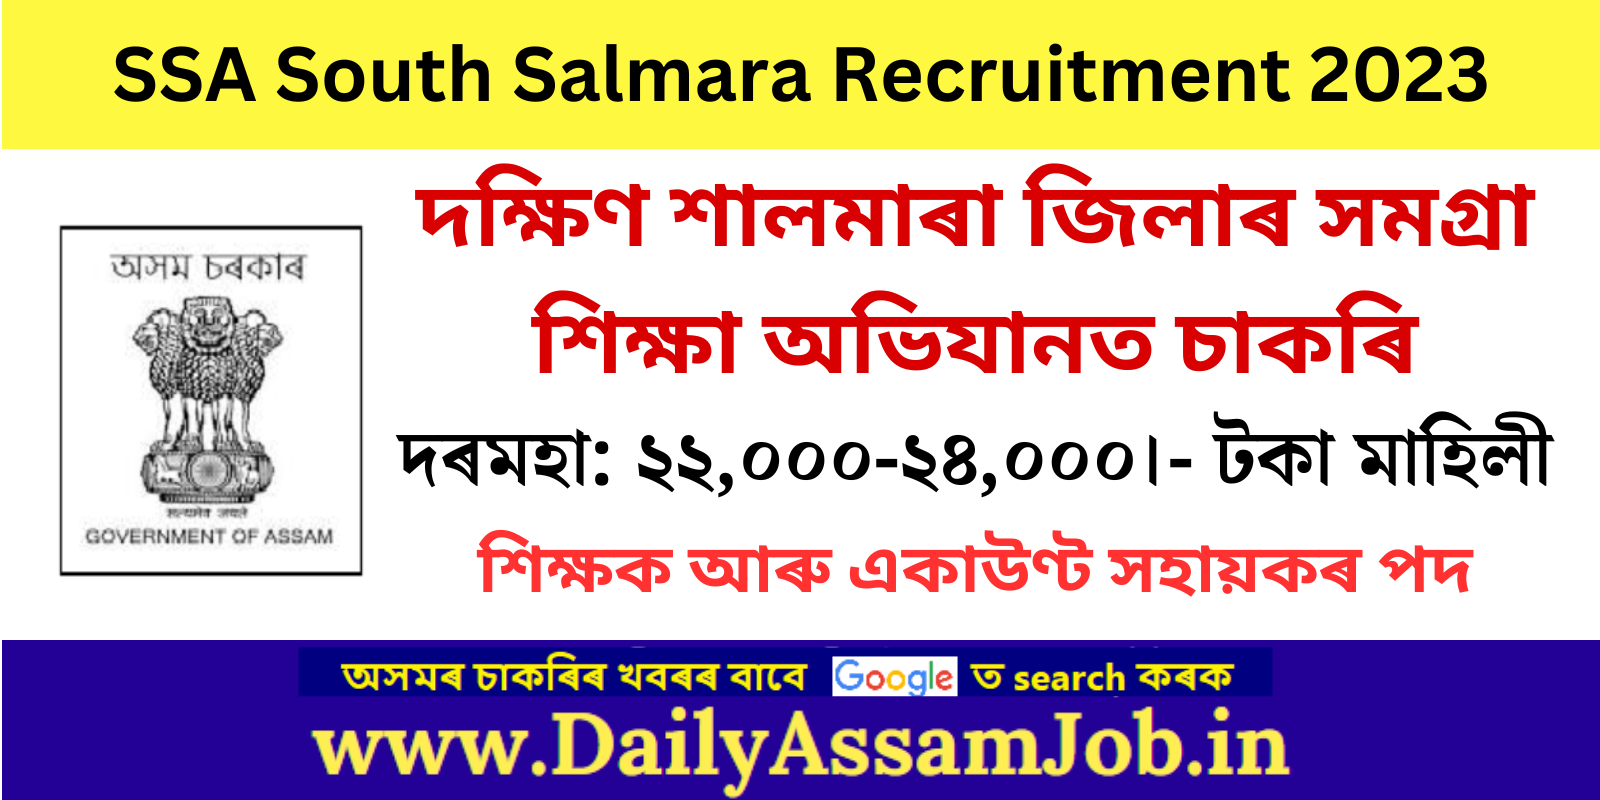 Assam Career :: SSA South Salmara Recruitment 2023 for 18 Teacher and Account Assistant Vacancy